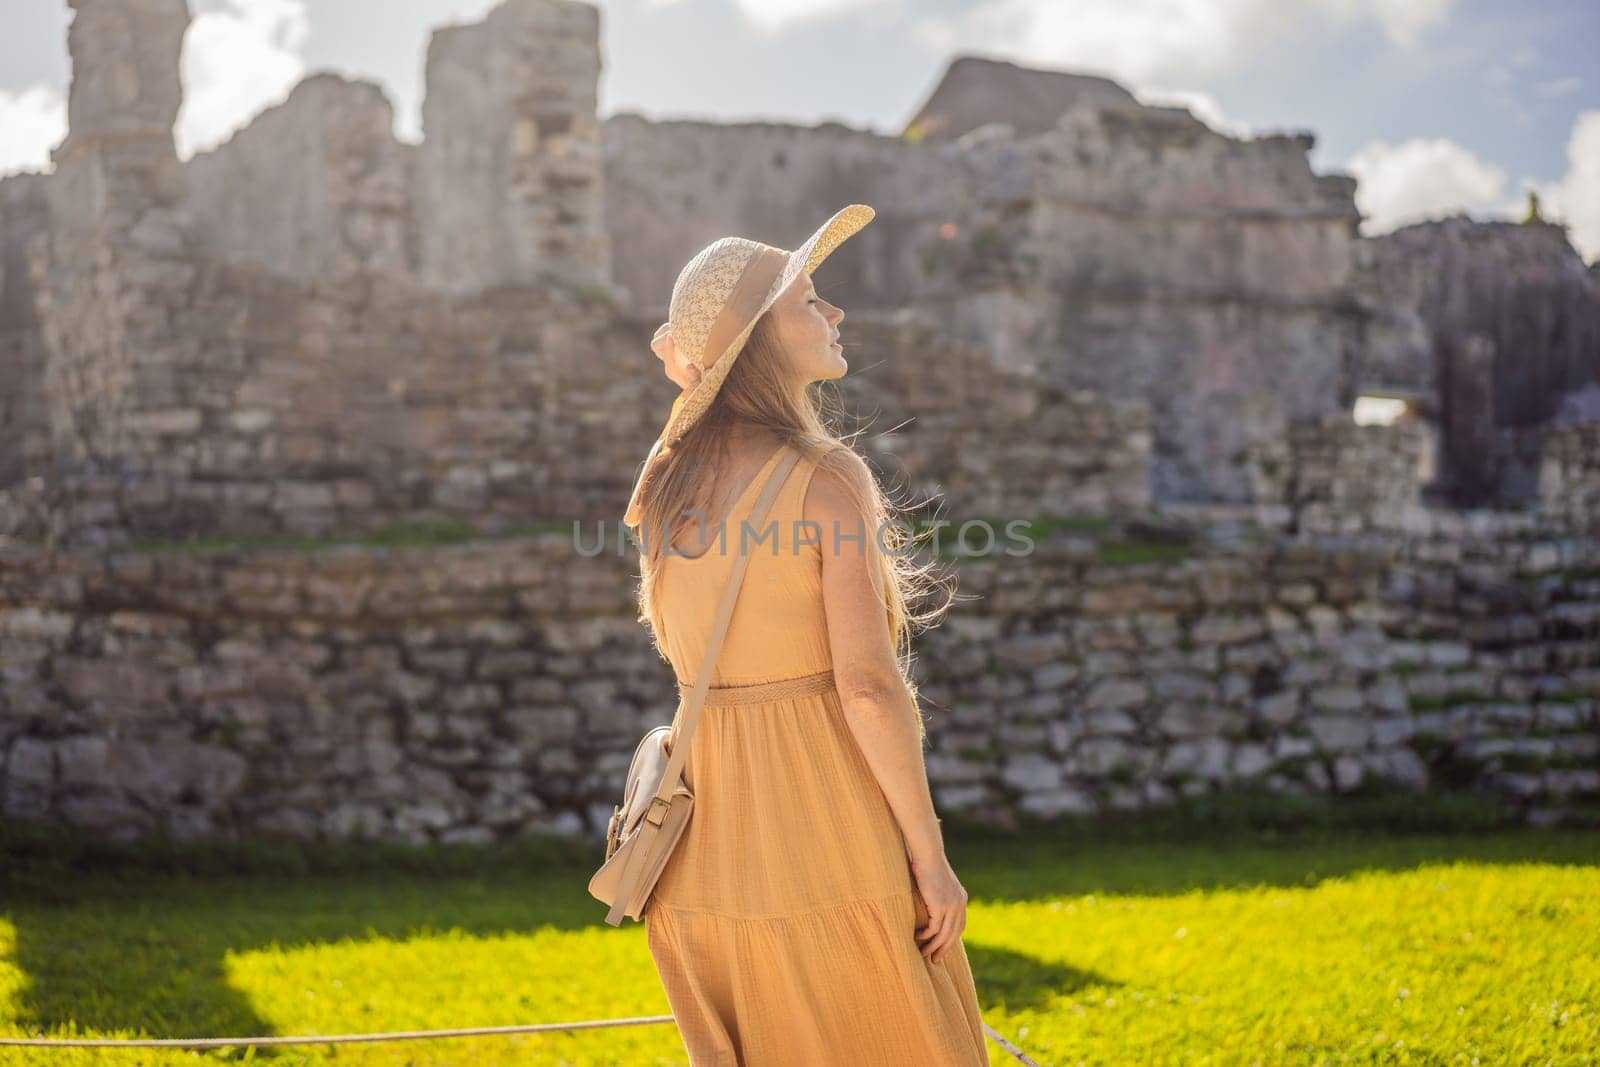 Woman tourist enjoying the view Pre-Columbian Mayan walled city of Tulum, Quintana Roo, Mexico, North America, Tulum, Mexico. El Castillo - castle the Mayan city of Tulum main temple by galitskaya